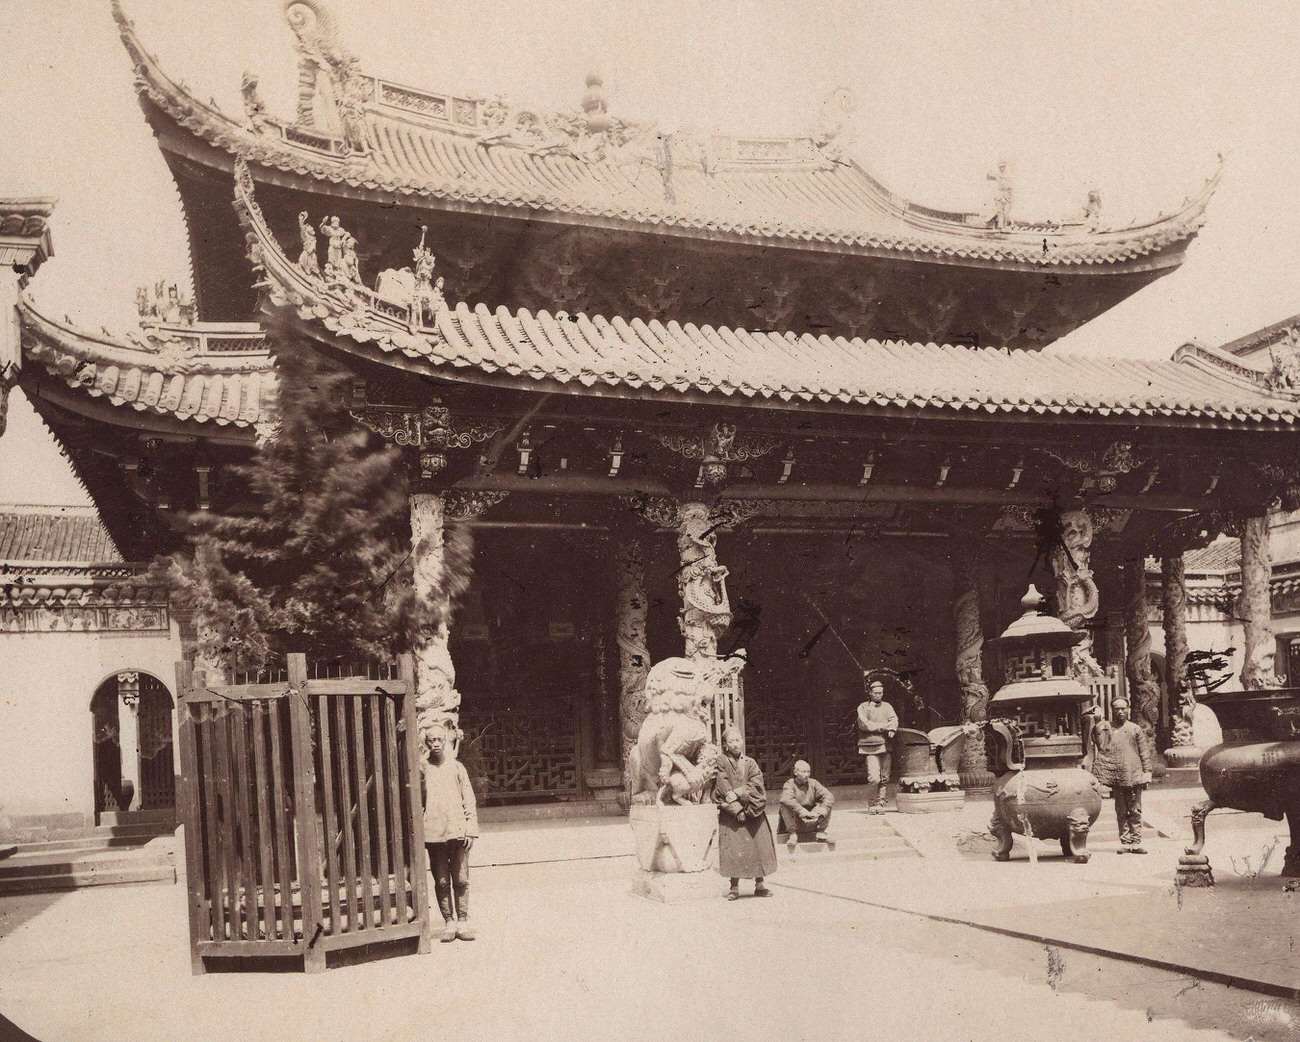 Pagoda in China, 1870